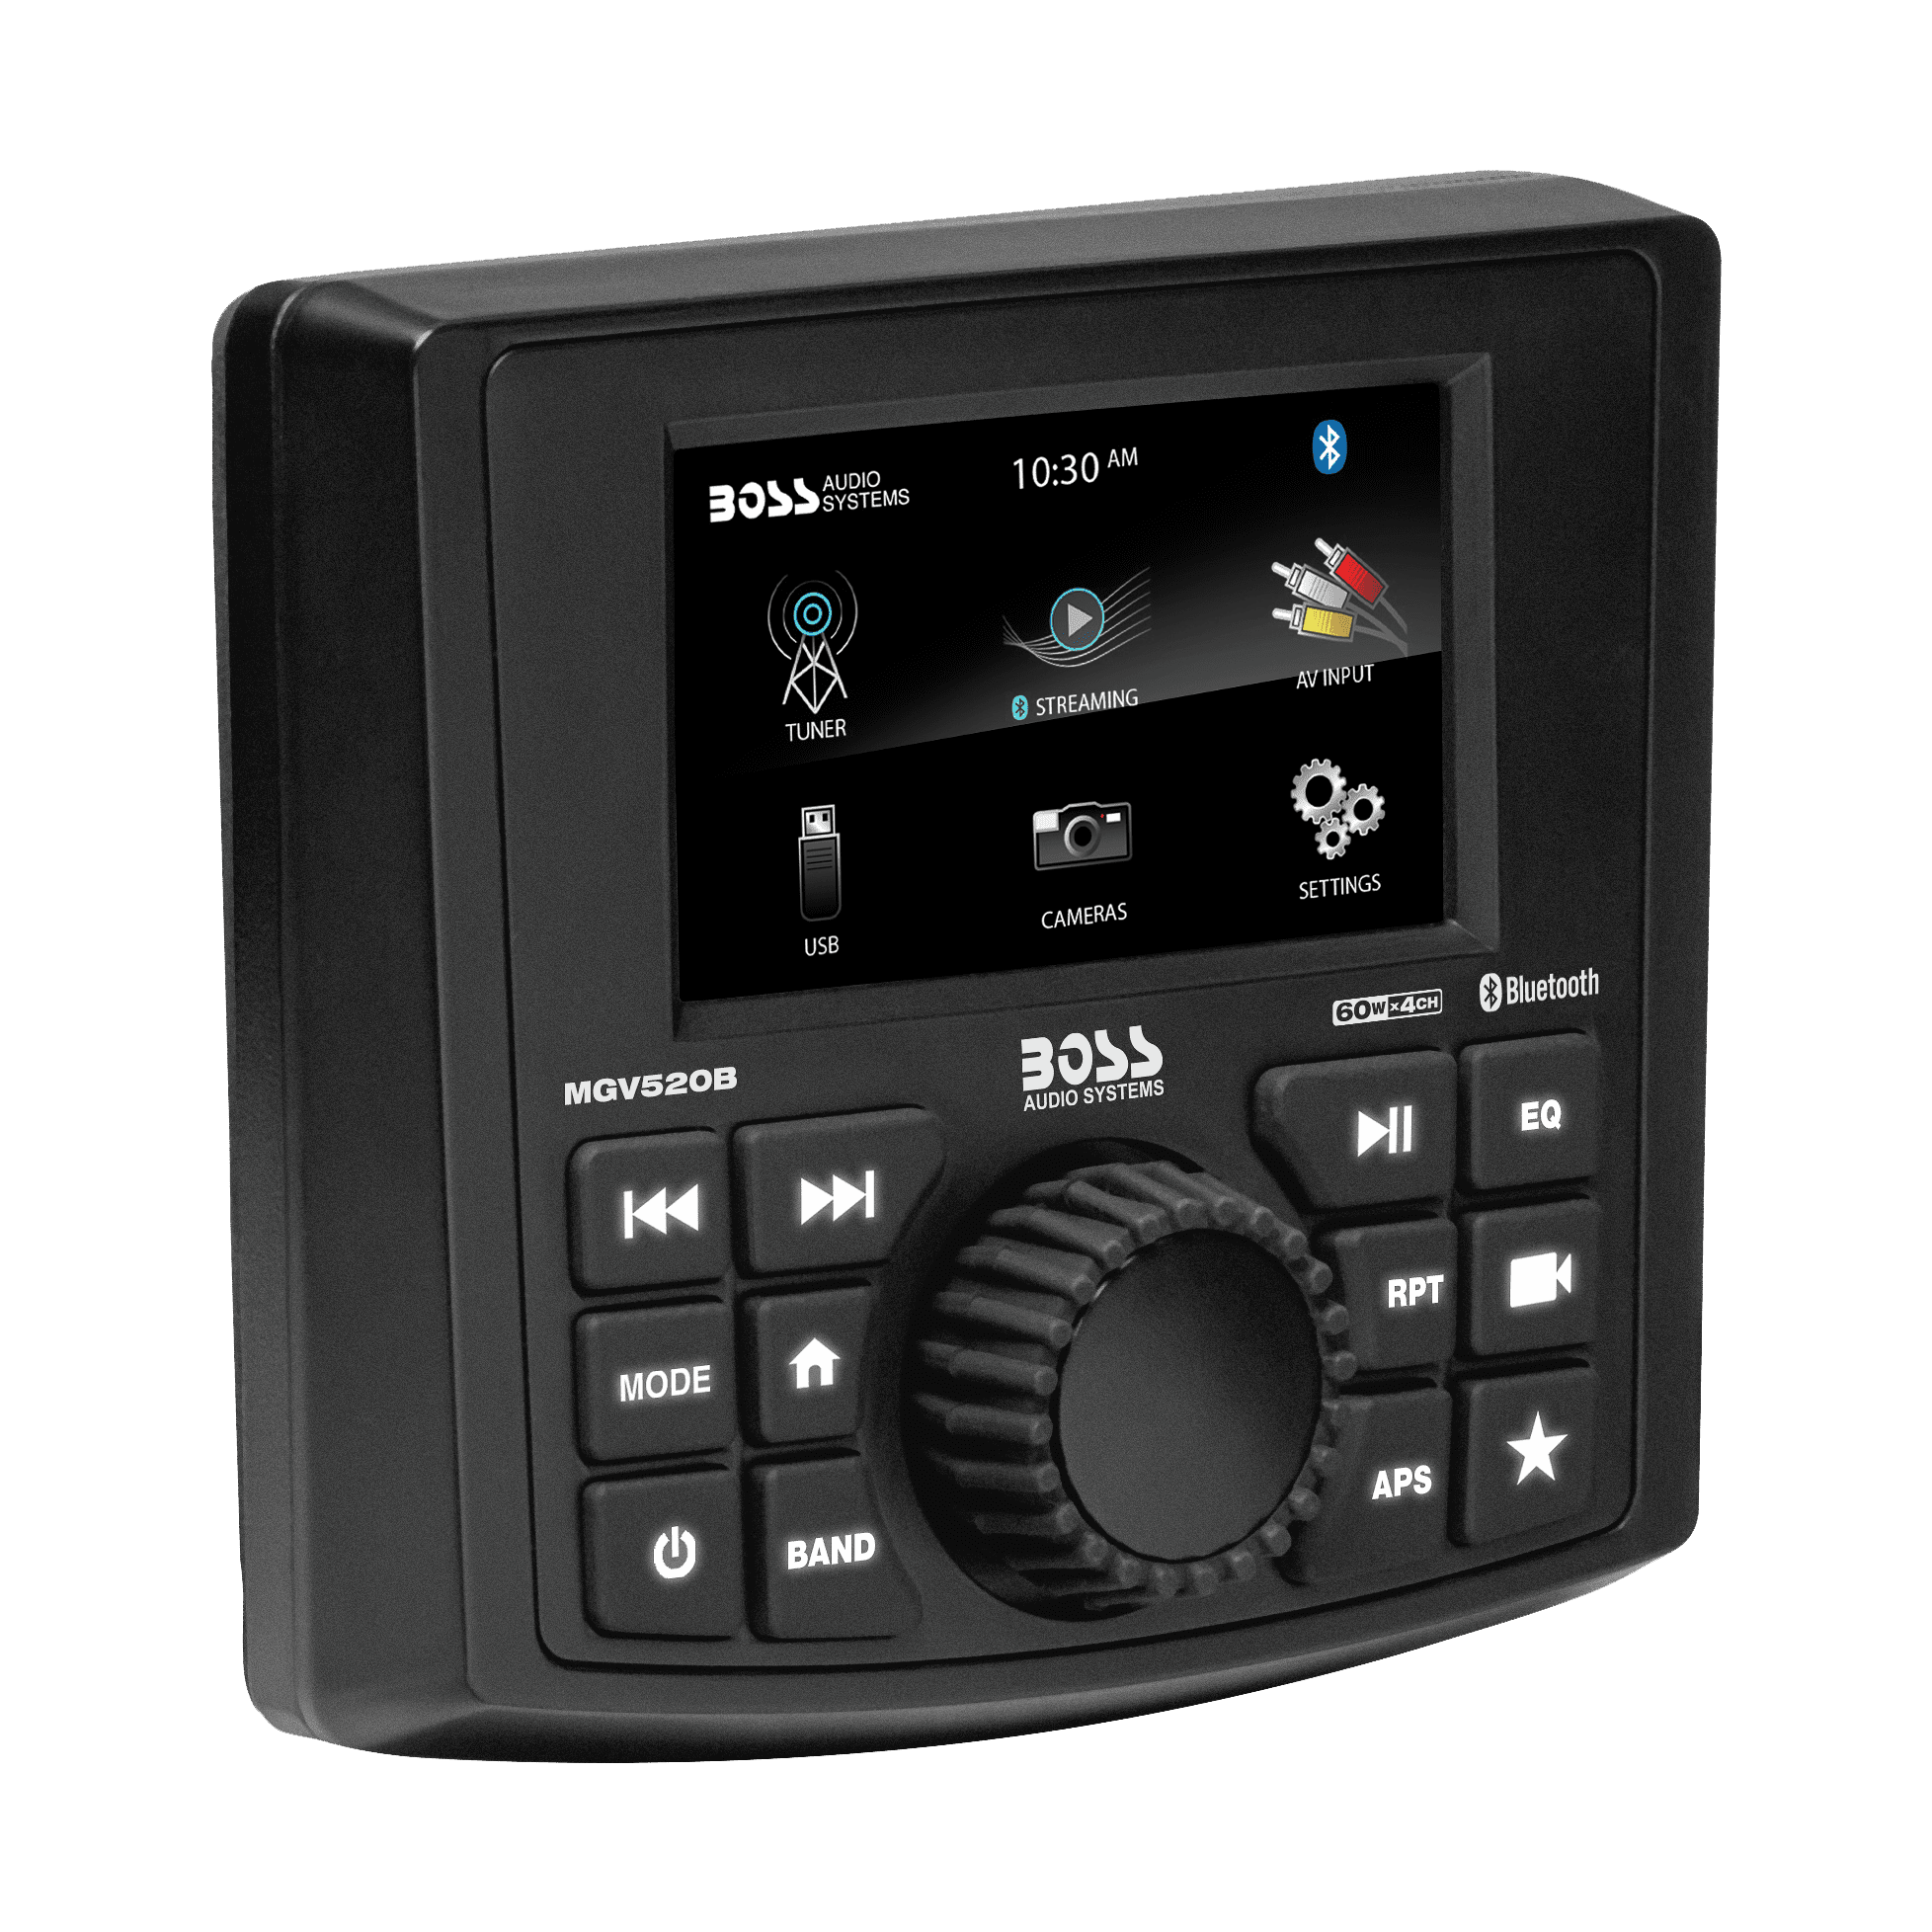 Bluetooth Marine Boat Radio Receiver: Waterproof Marine Gauge Stereo System  - HD LCD Display AM FM Tuner MP3 AUX-in USB Built-in EQ